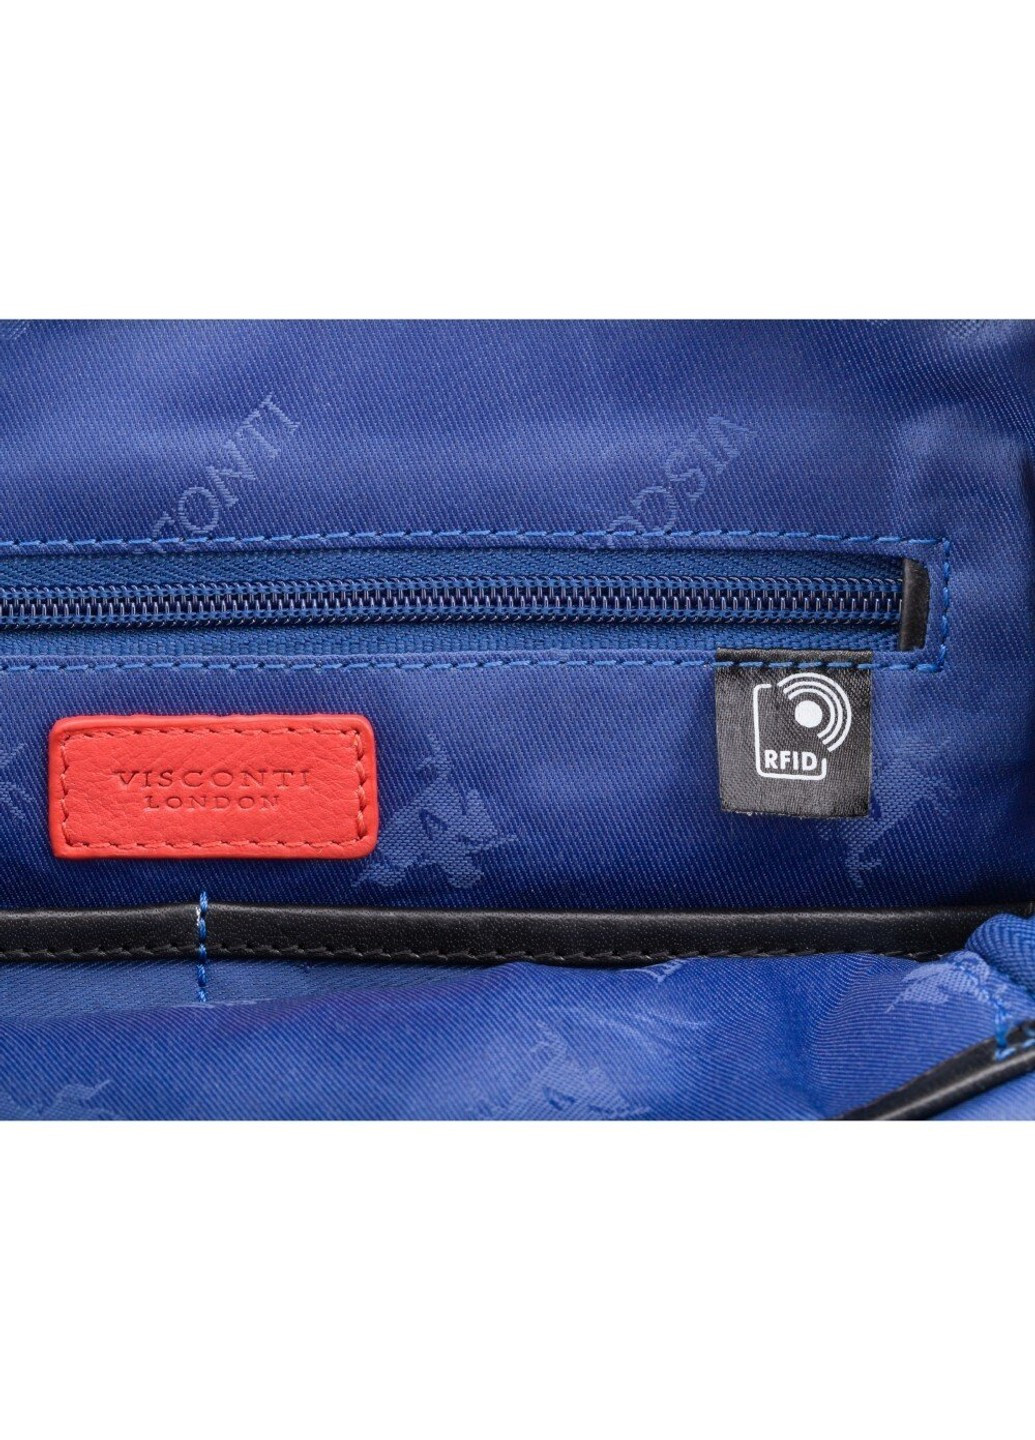 Мужская кожаная сумка с RFID защитой ML36 Vesper A5 (Black) Visconti (262086576)